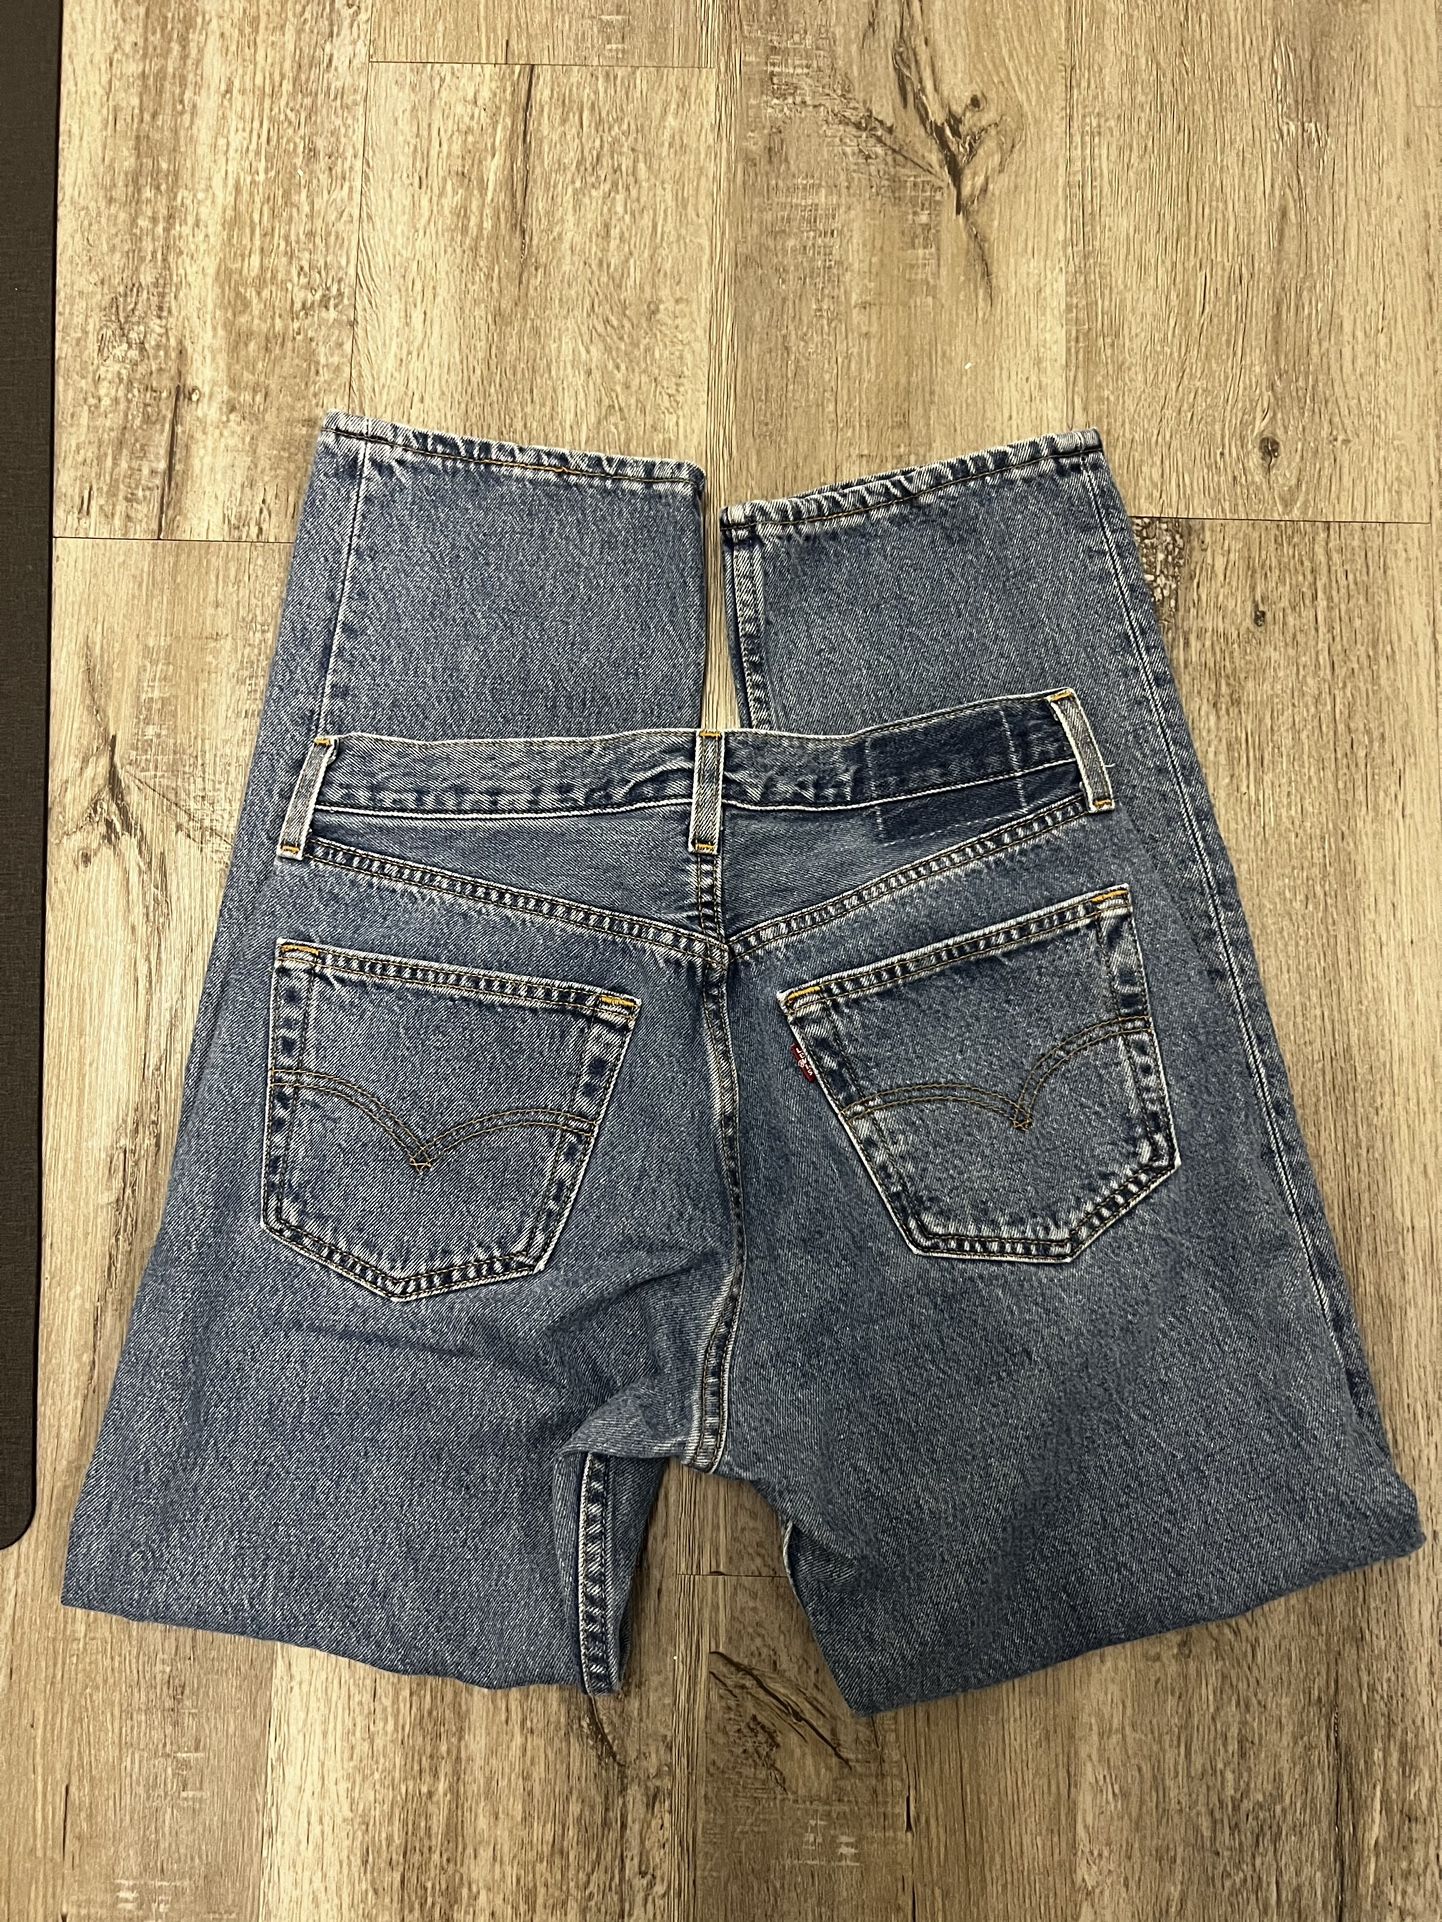 levi jeans: 1 light wash 505 30/30 and 1 dark wash 